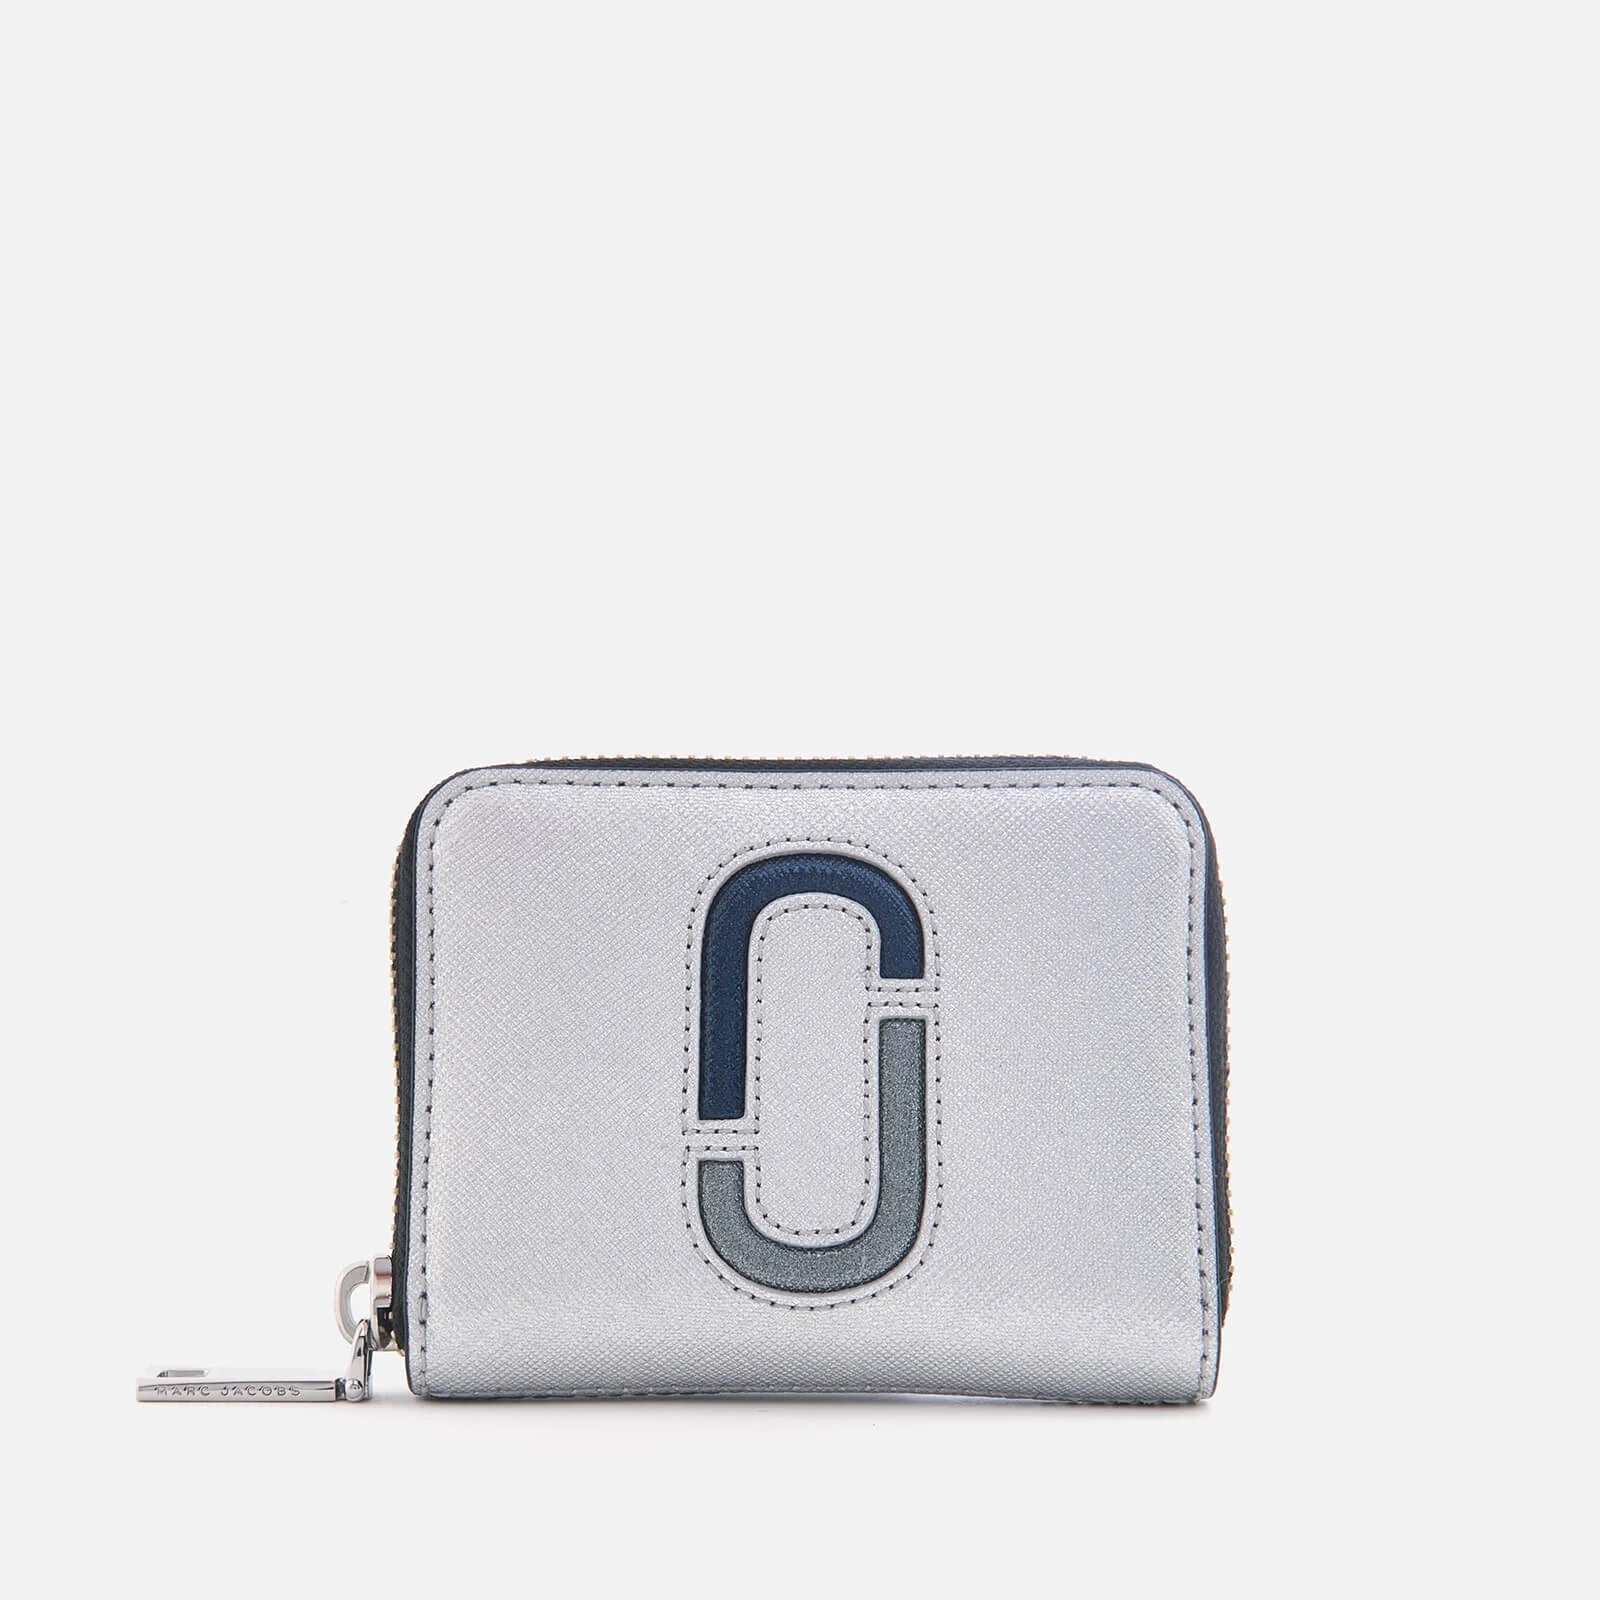 Marc Jacobs Women's Zip Card Case - Silver/Multi Image 1